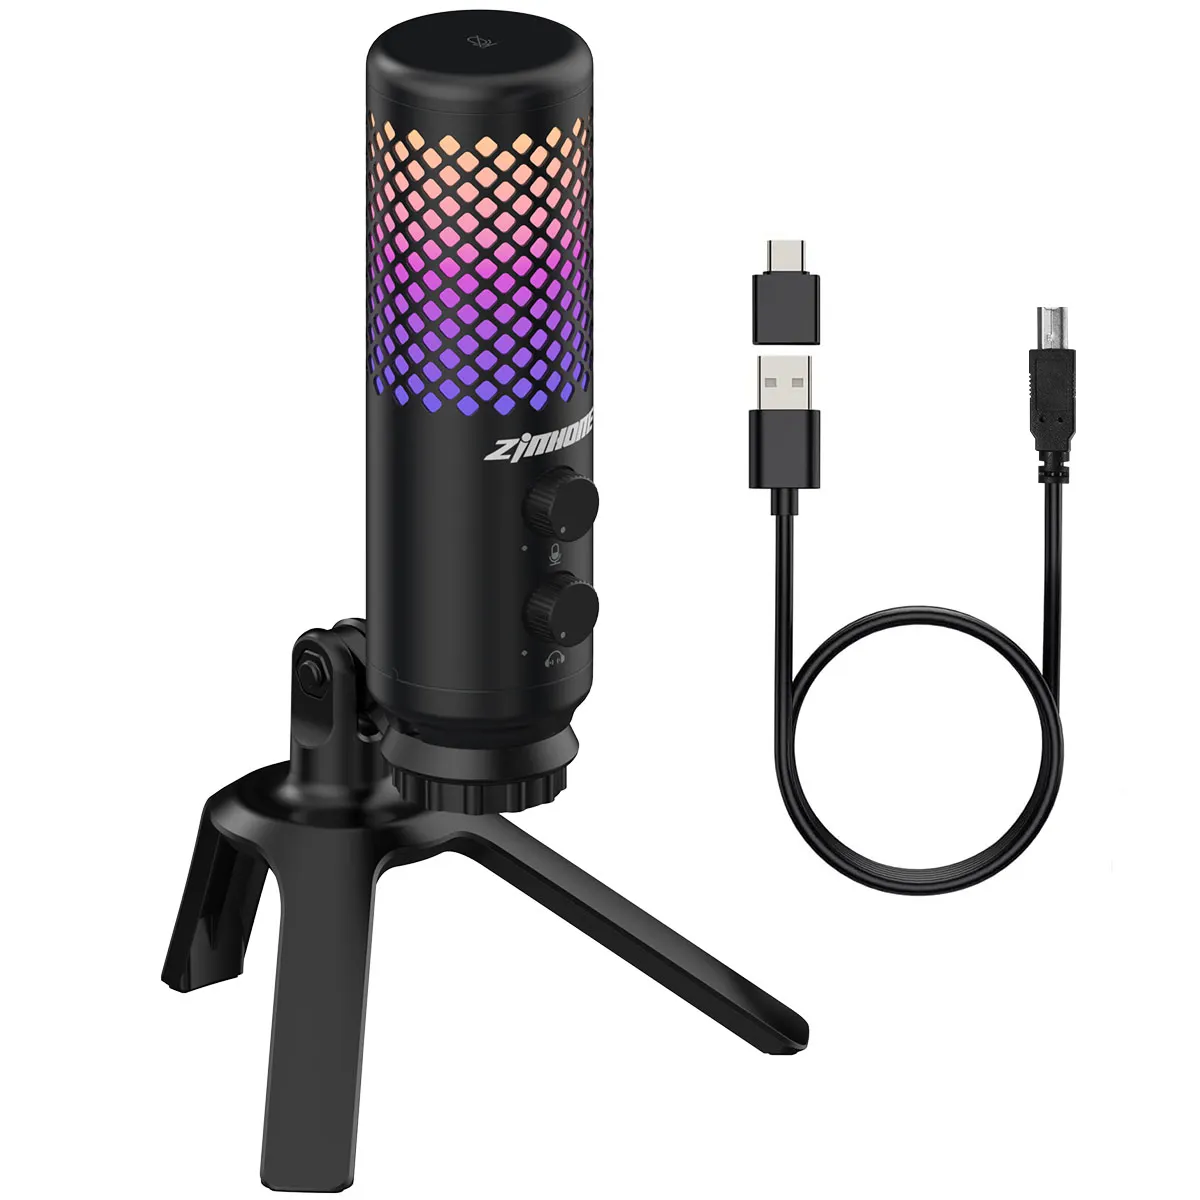 New Live Streaming Condenser Desktop rgb Gaming podcast equipment USB Recording Studio Microphone 24bit 192khz mic